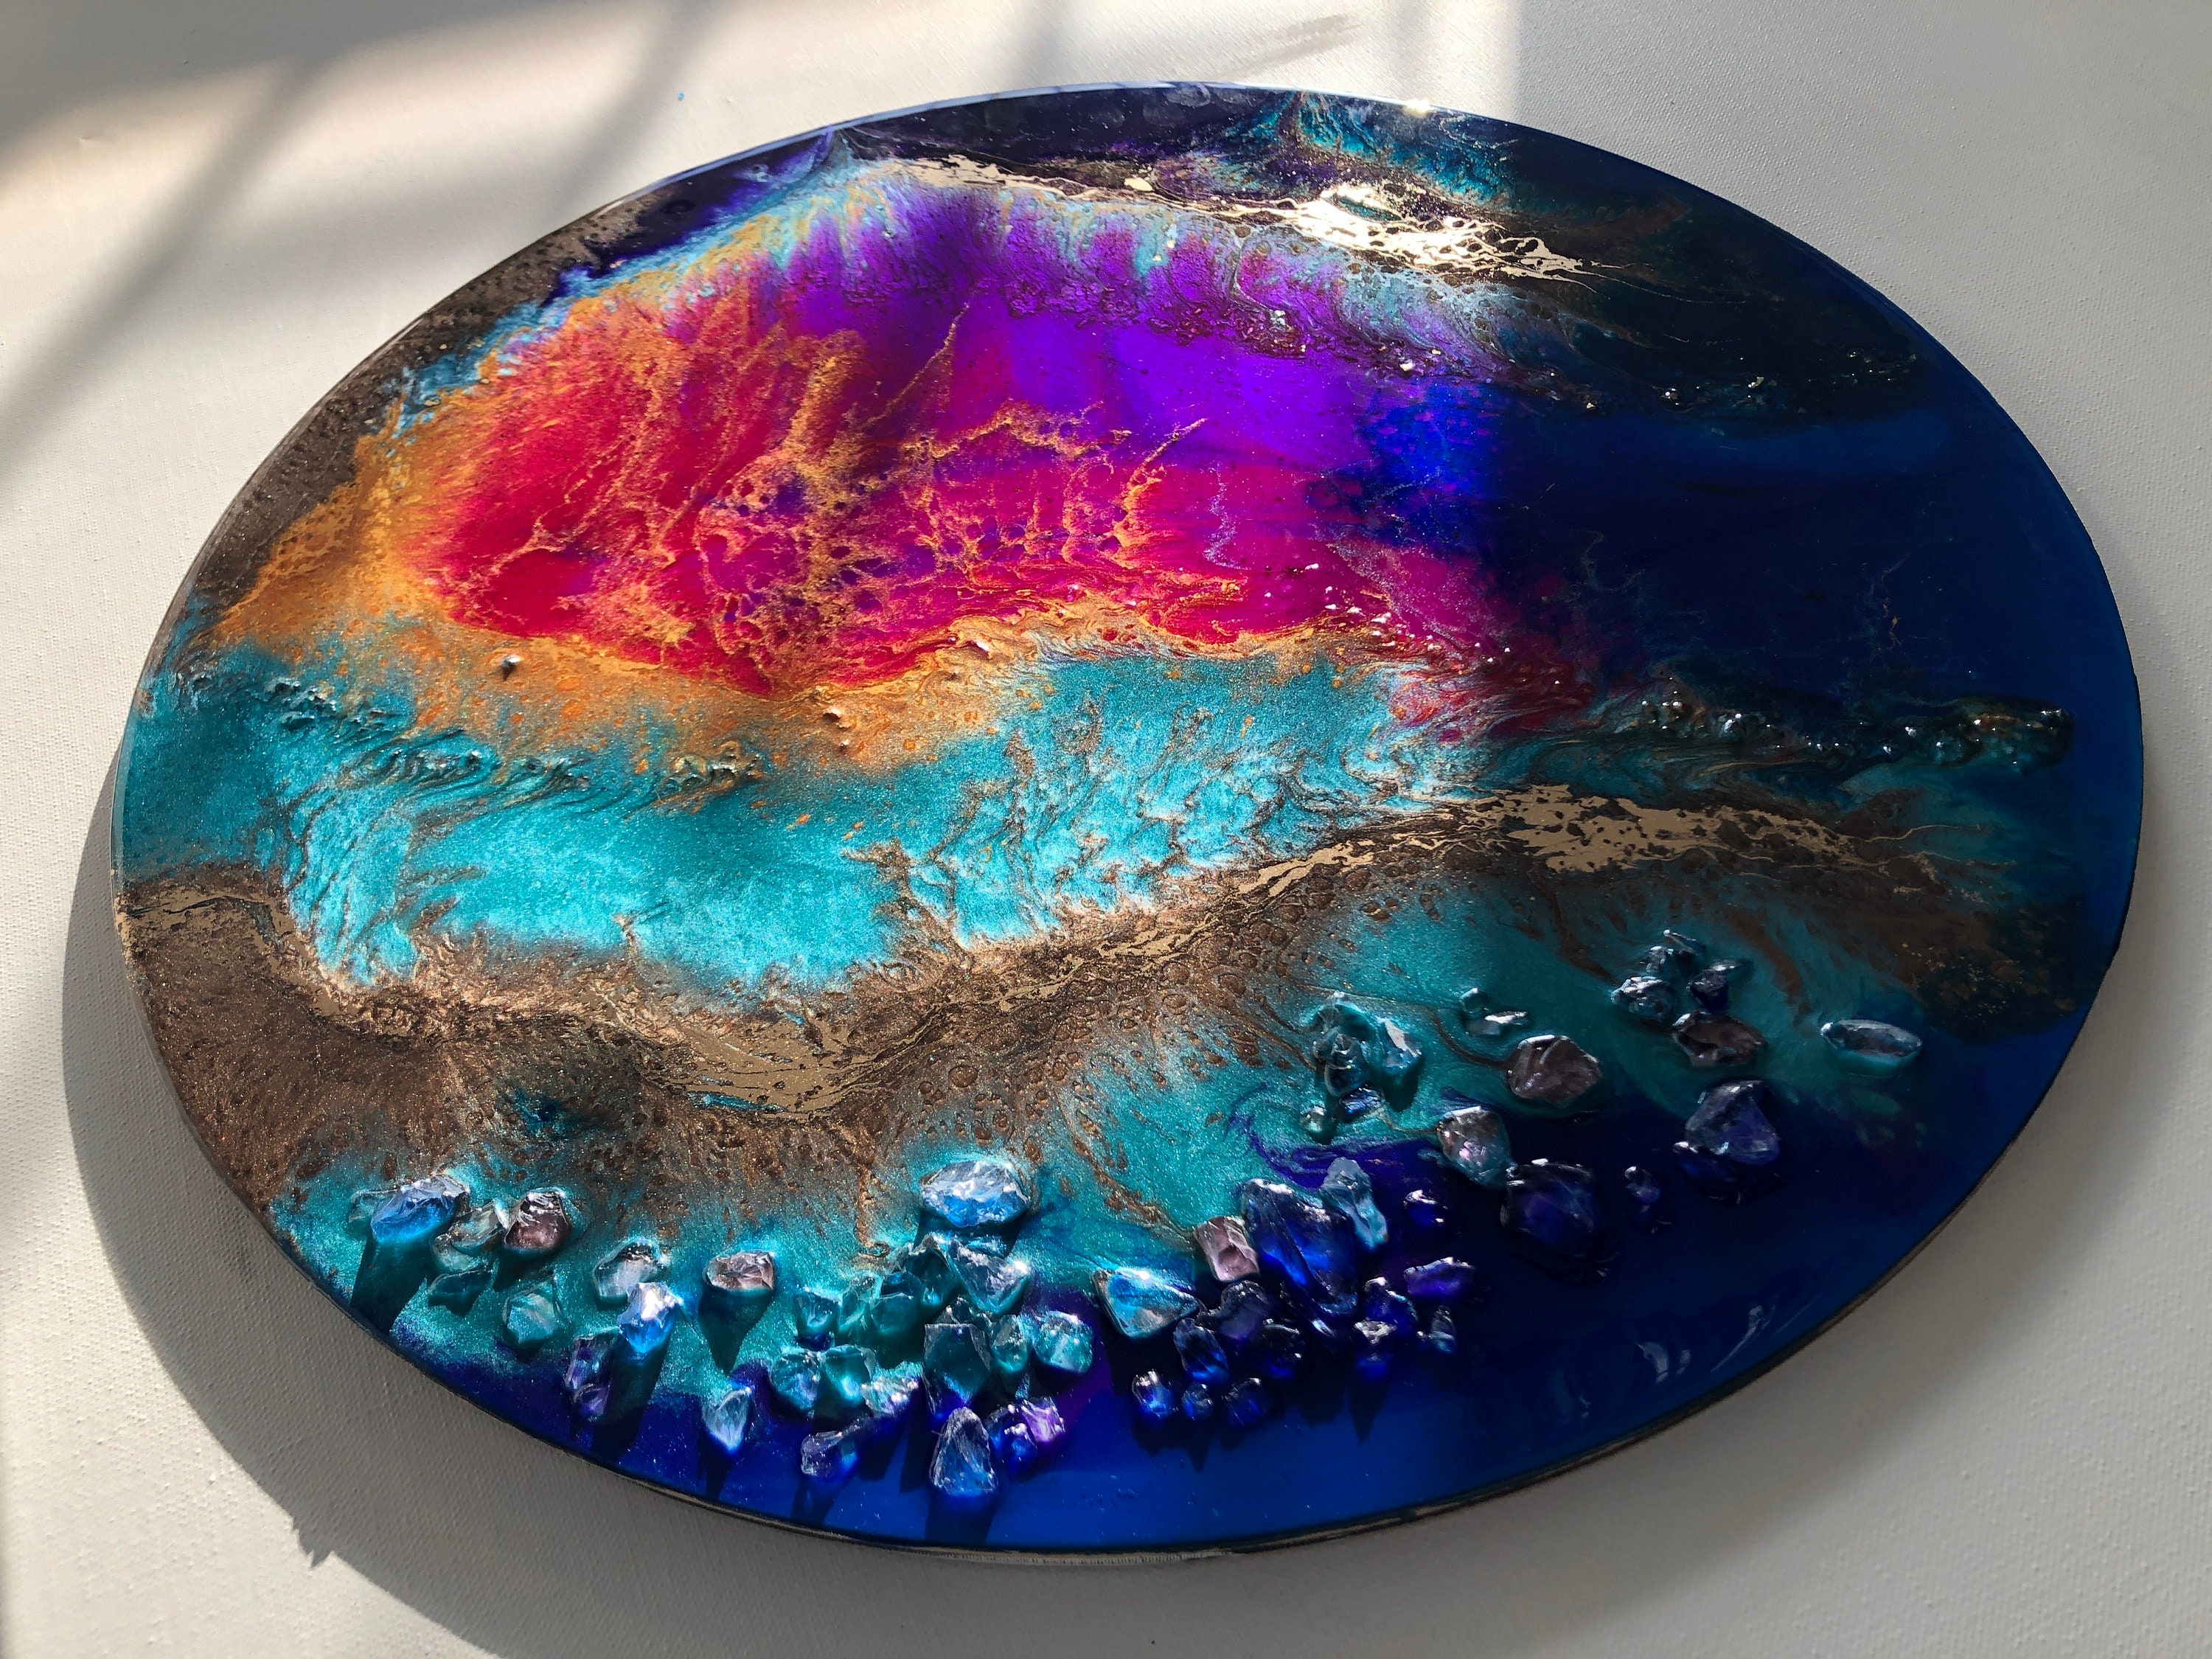 Online] Resin Art Geode Coaster Class – Assembly: gather + create